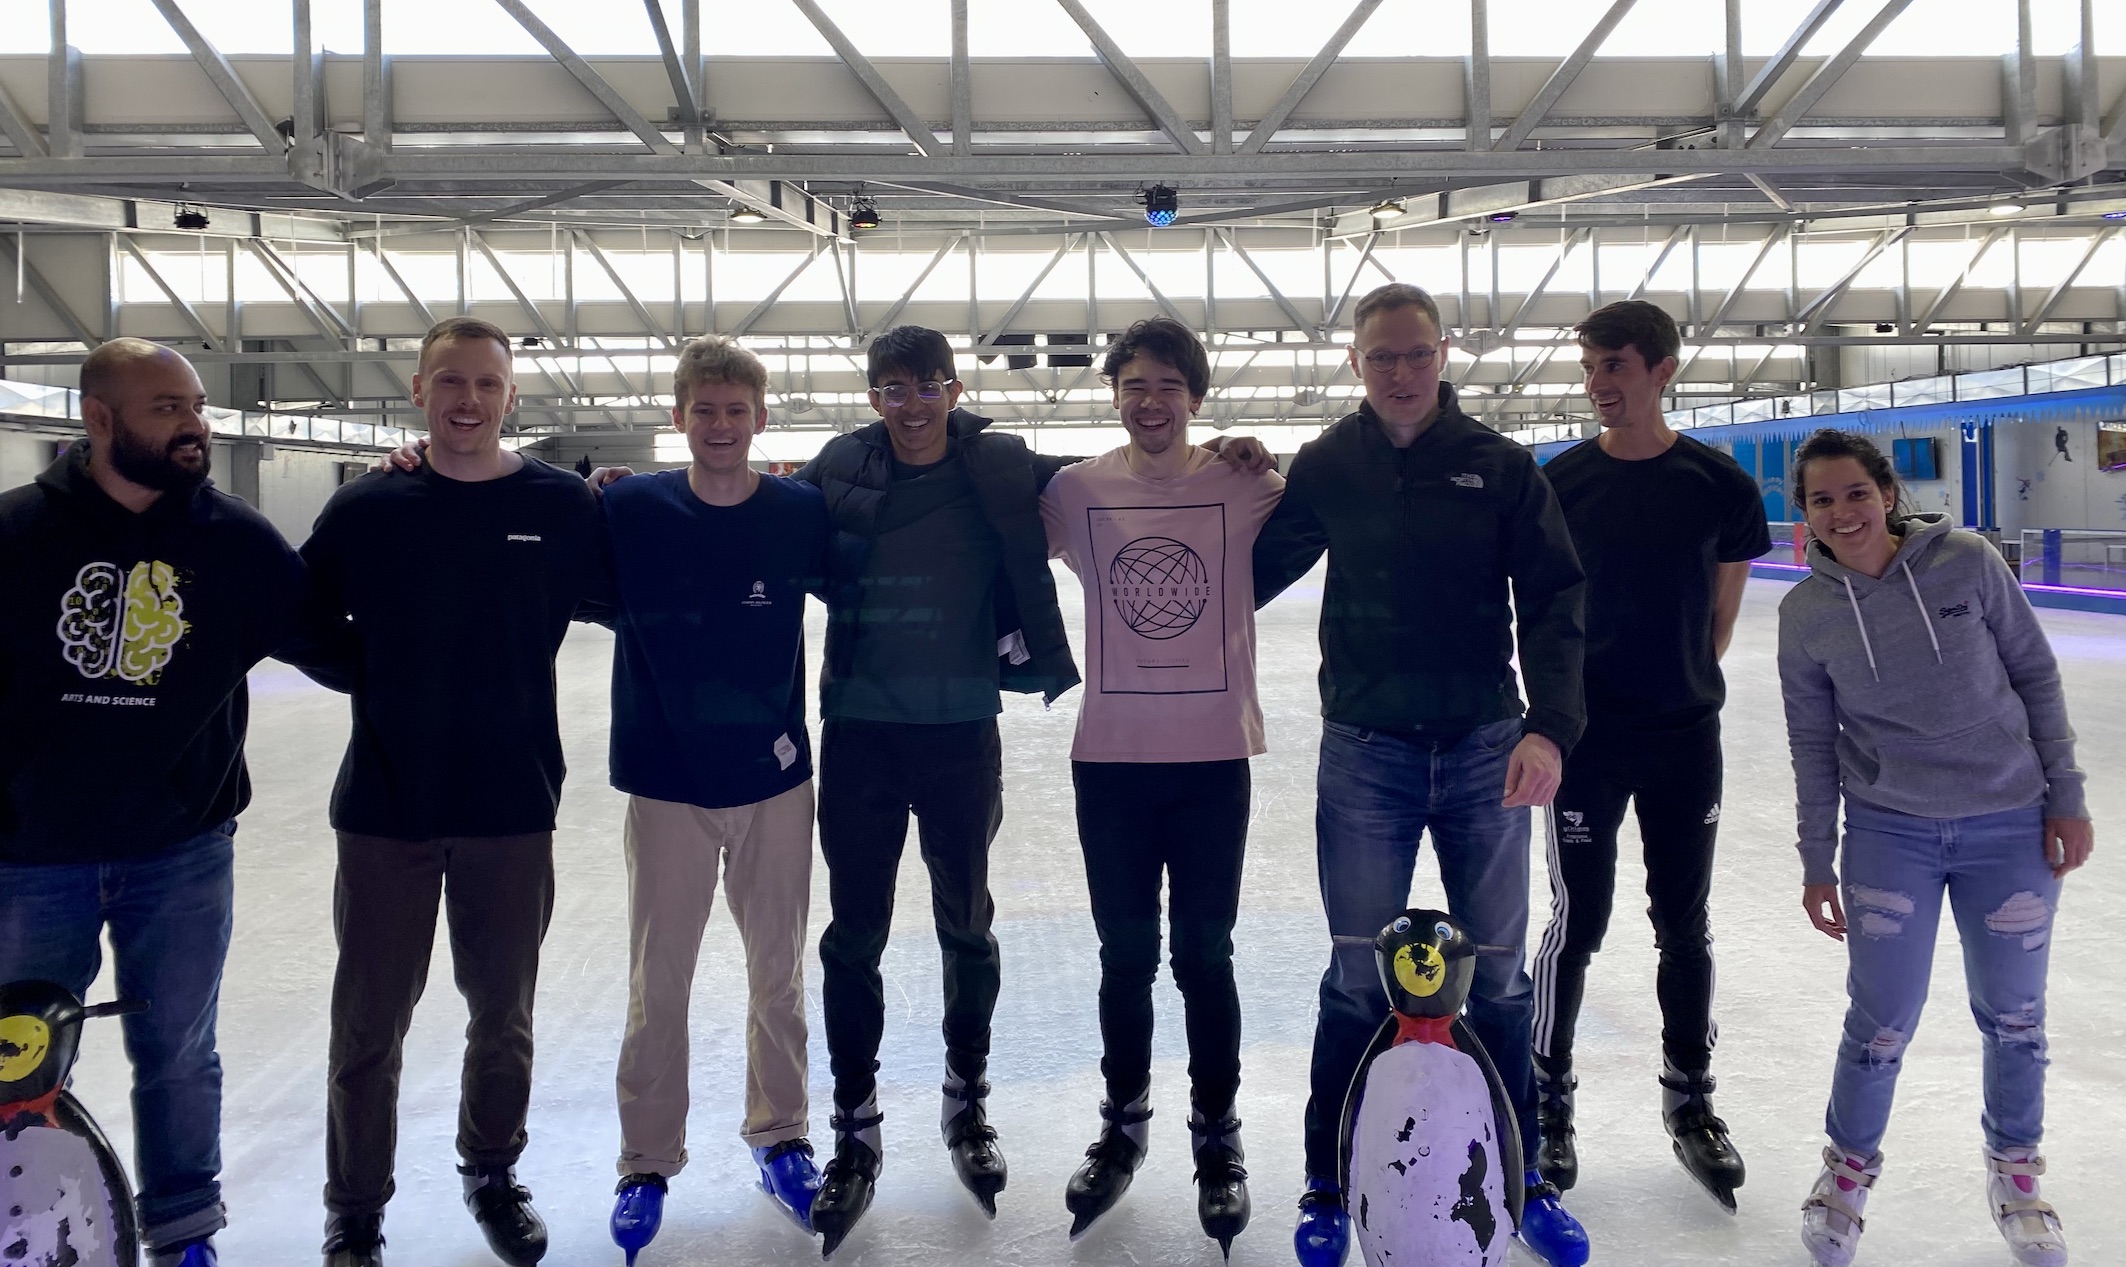 Ice skating party (2022): Adesh, Daniel, Ben, Dev, Jacob, Ivan, Ryan, Vanessa (missing: Rokon)